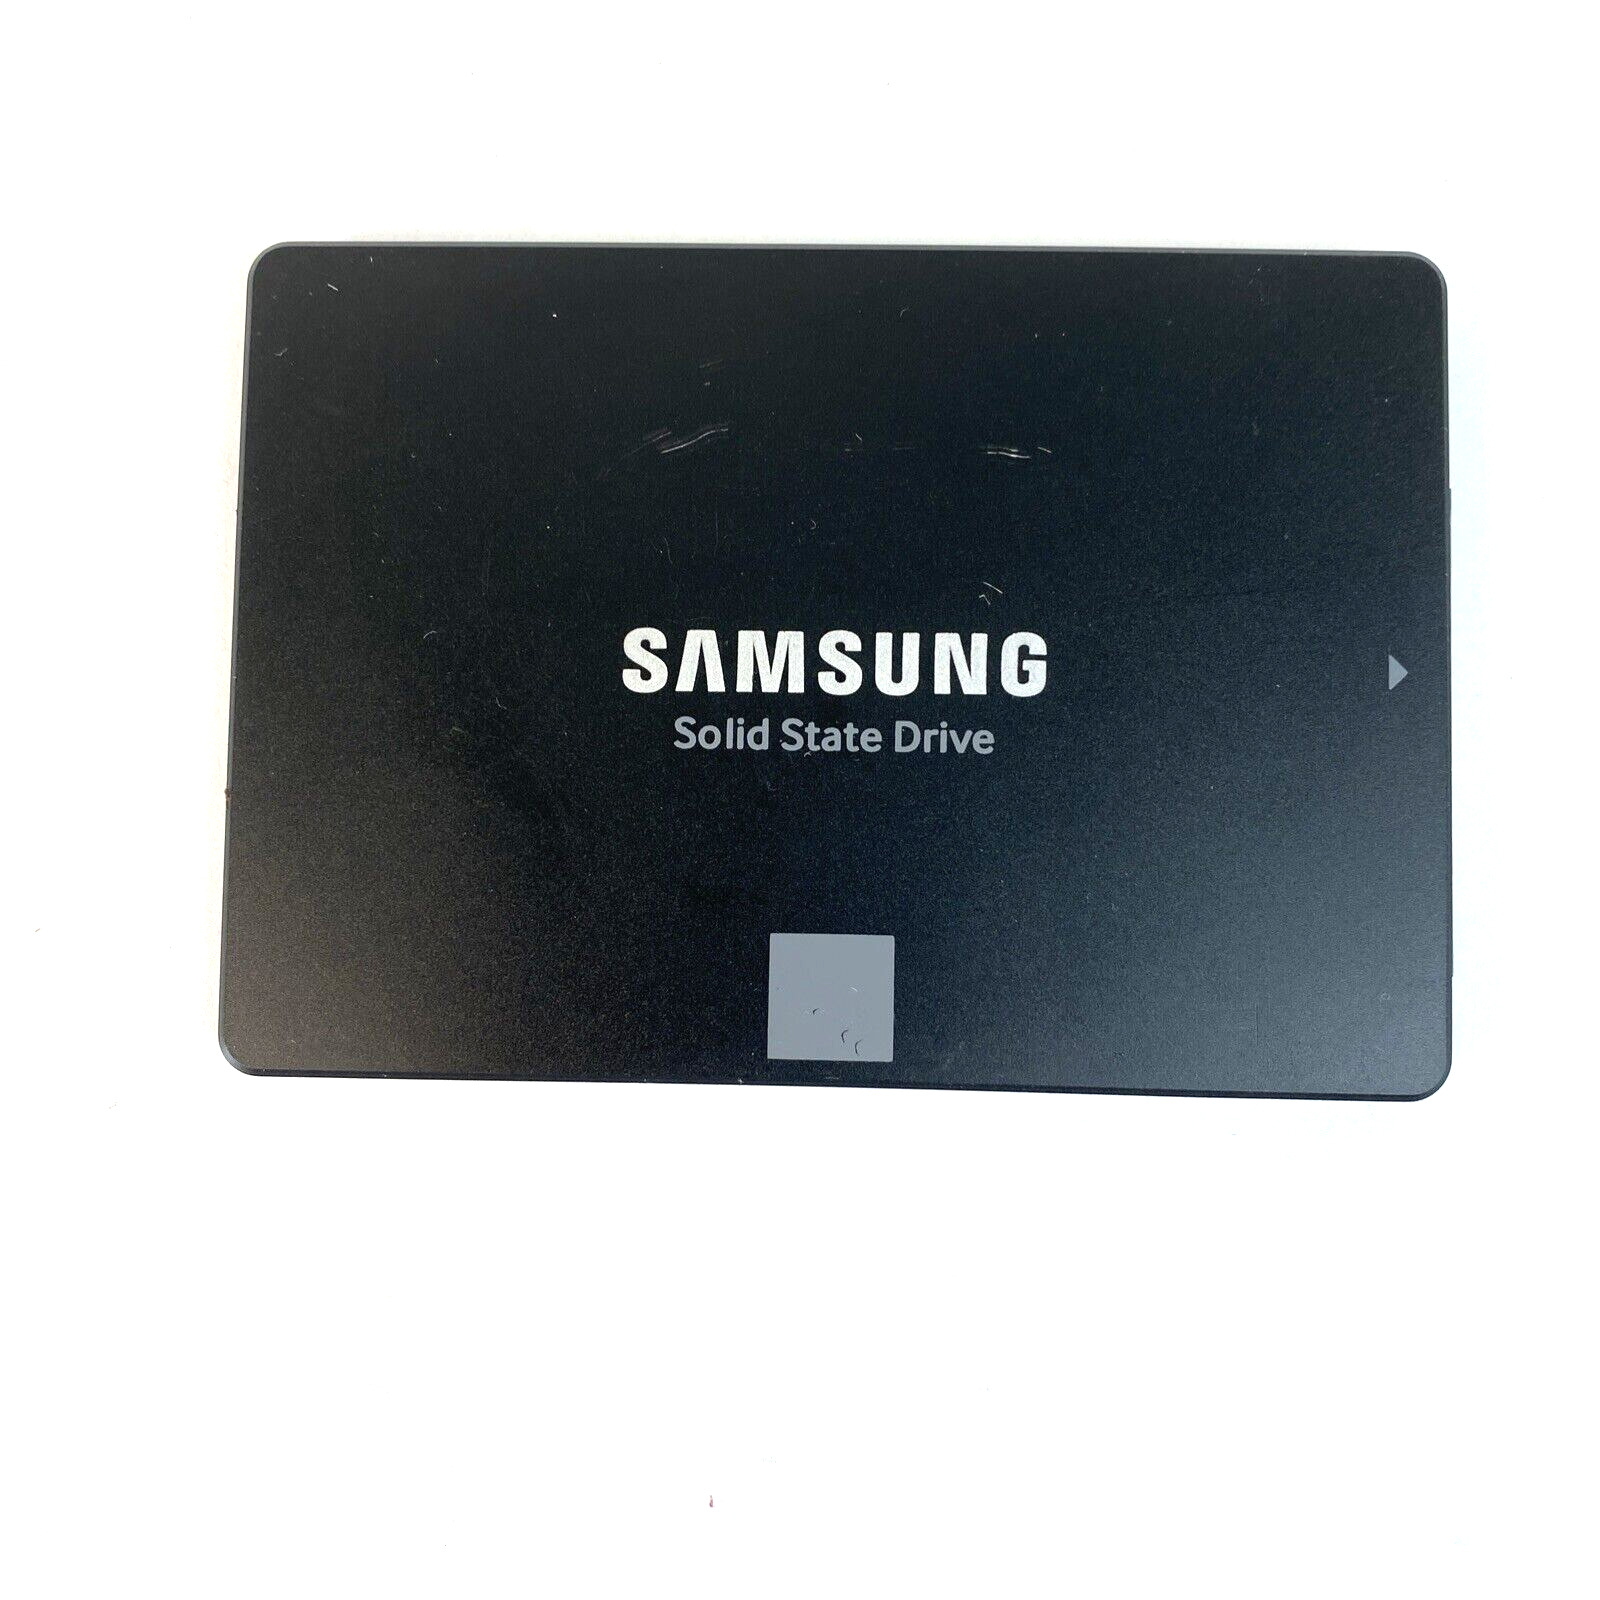 Samsung 850 EVO Series MZ-75E120 120GB 2.5